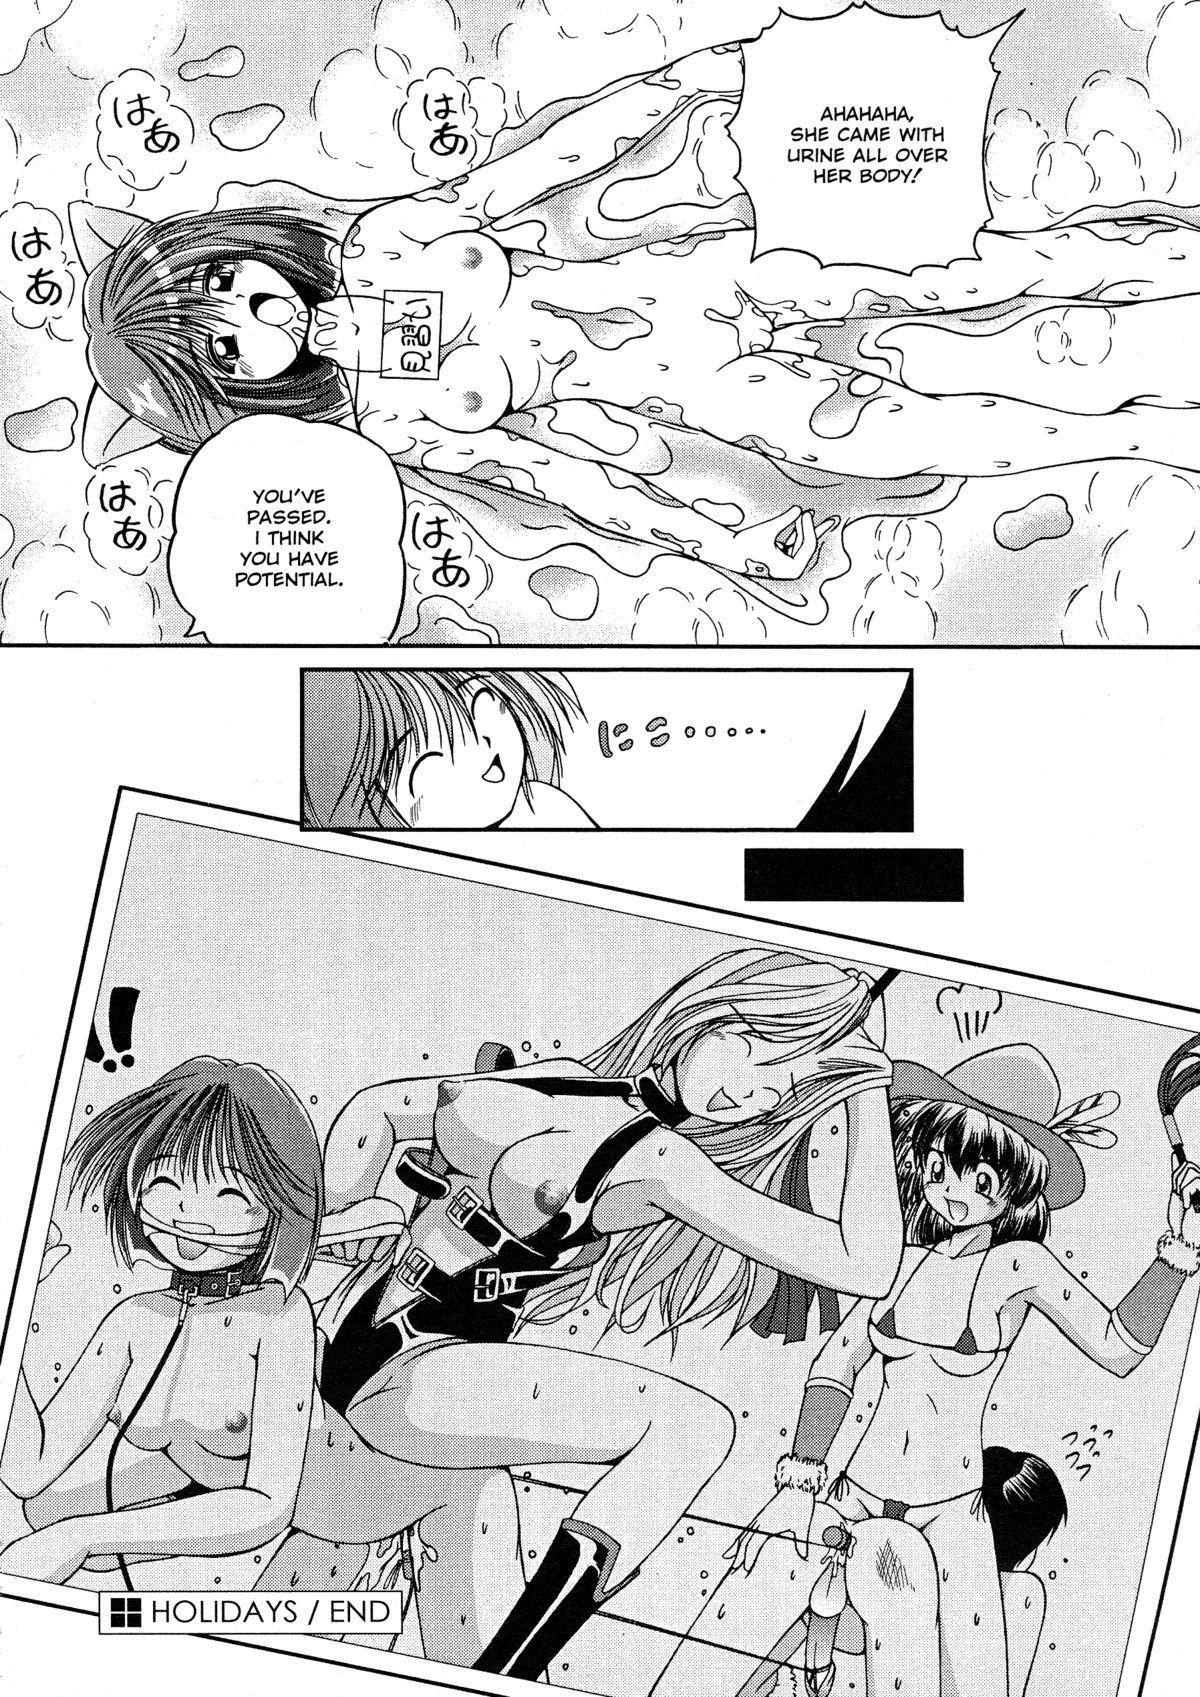 Flashbang!Hi-res 148 hentai manga